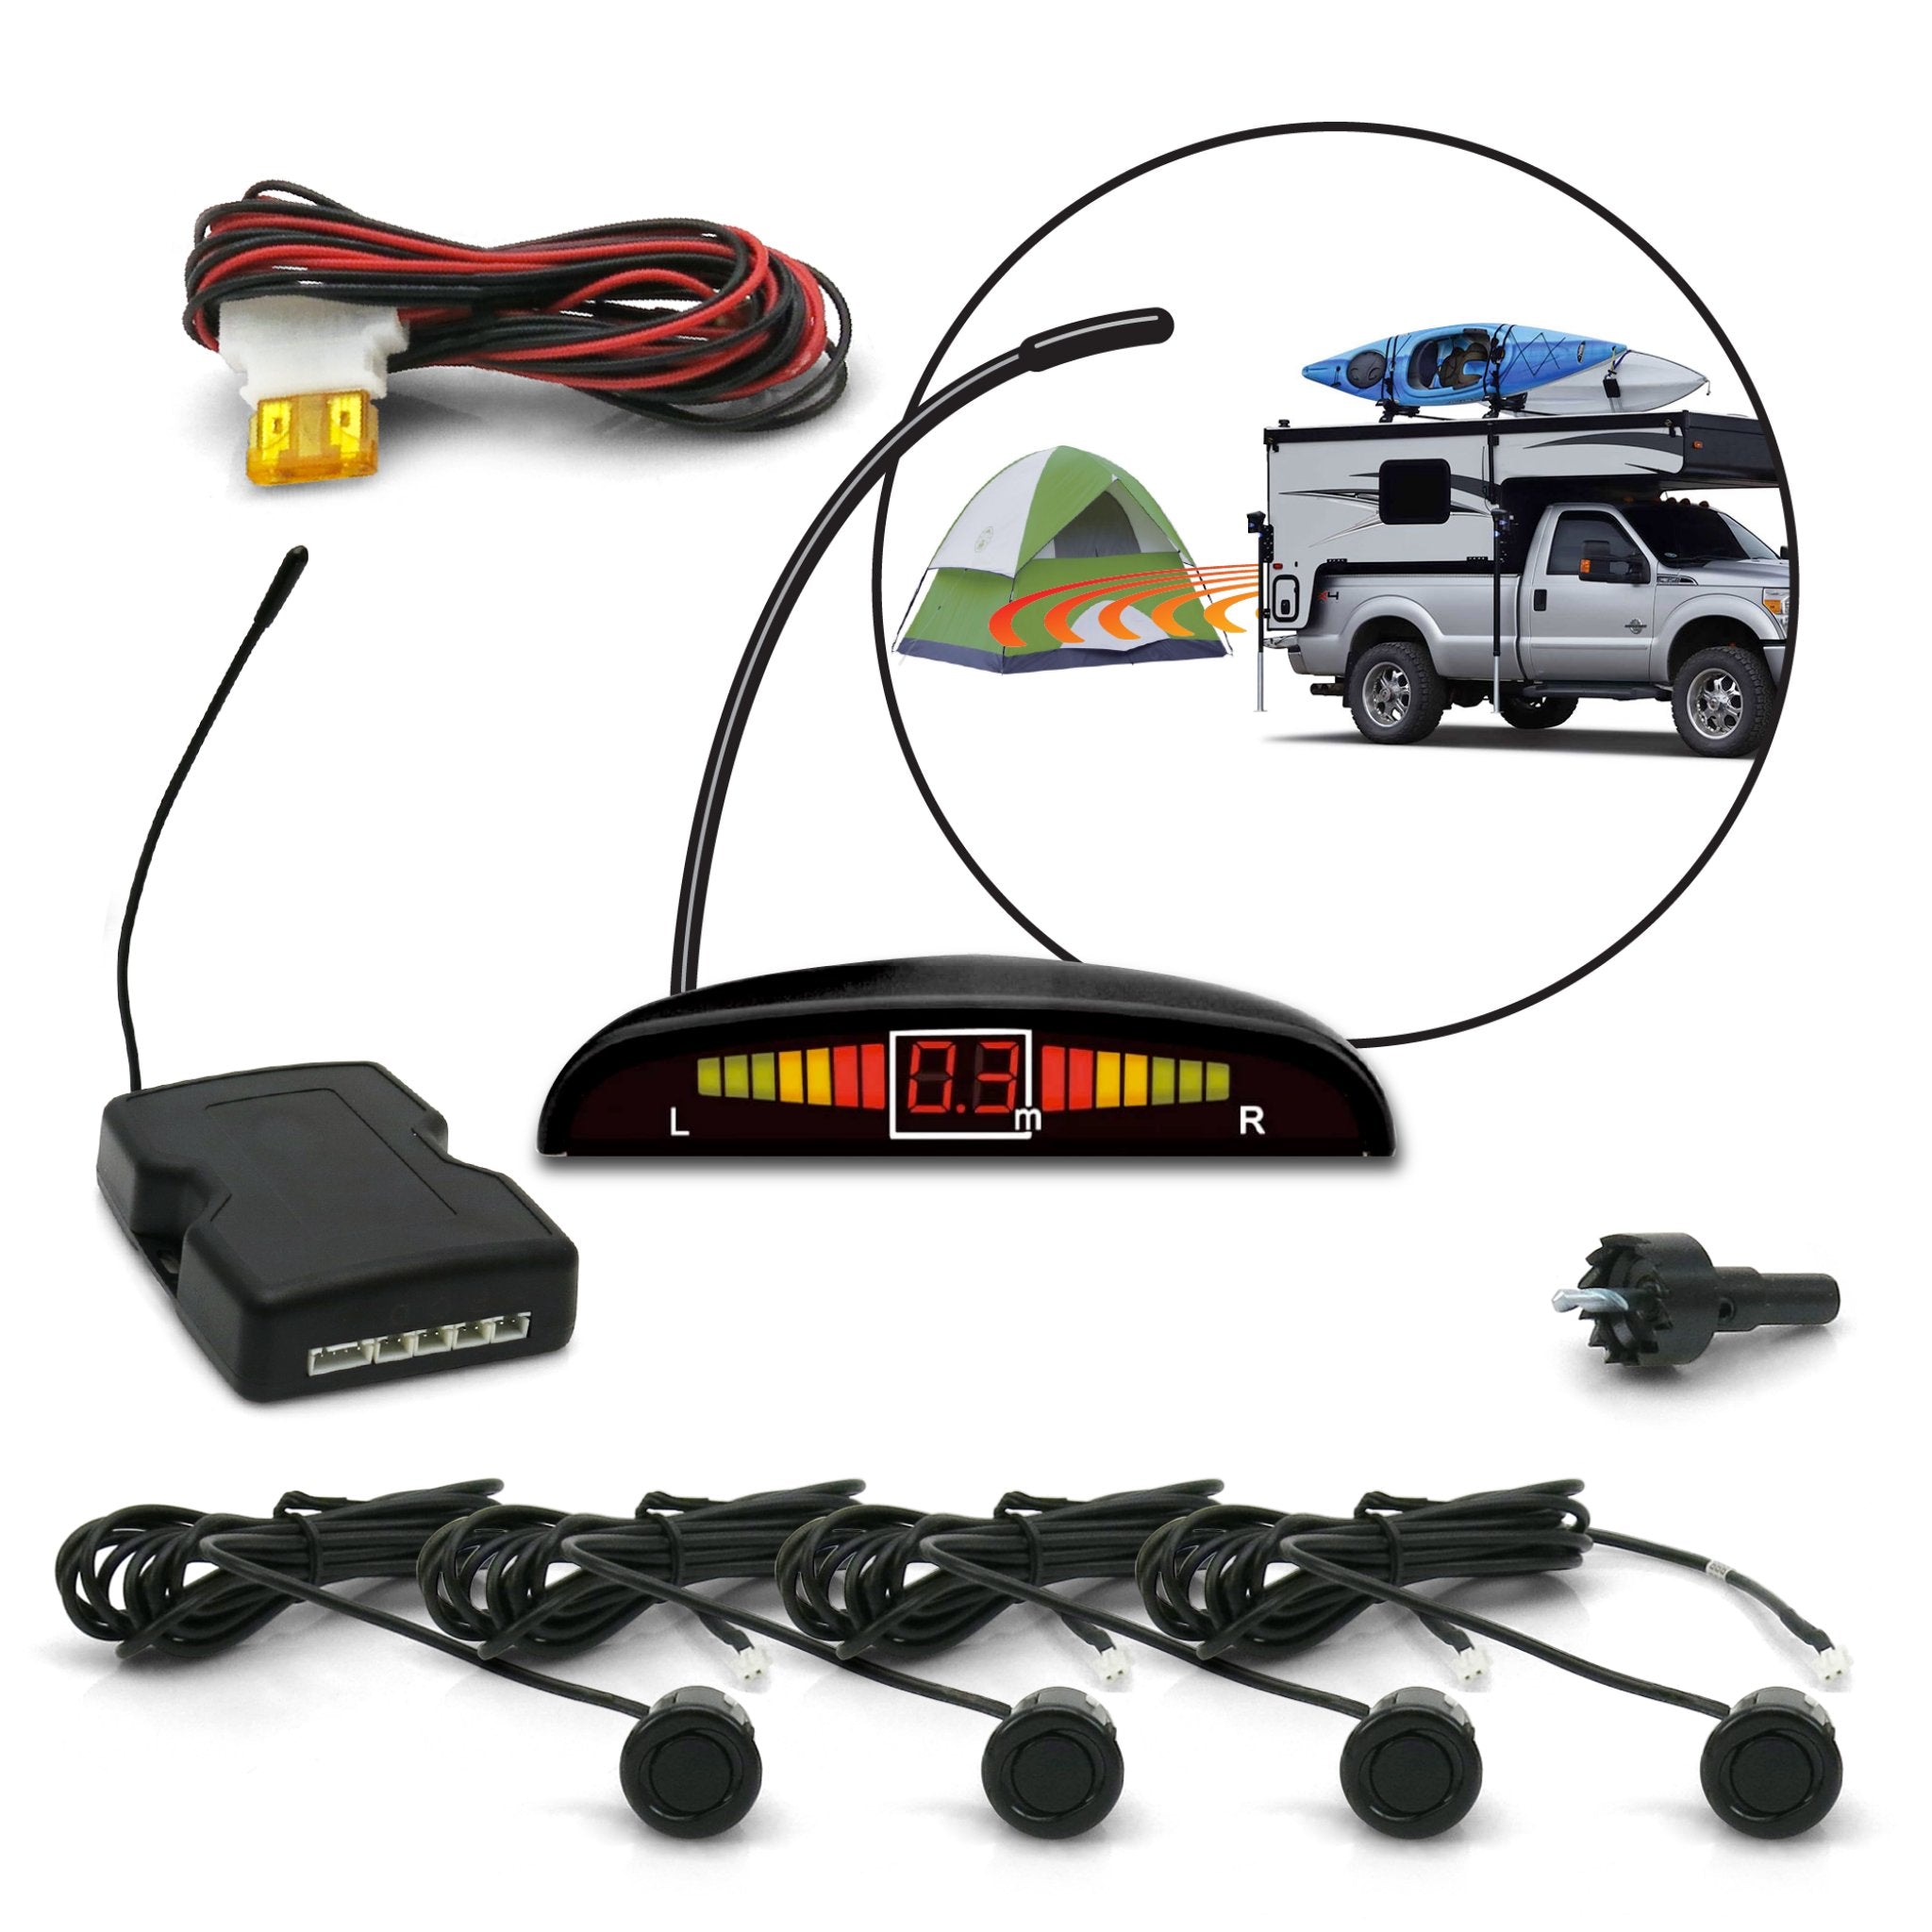 Backup Parking Sensor Reverse Warning Kit Wireless LED Display Sound Alarm Alert